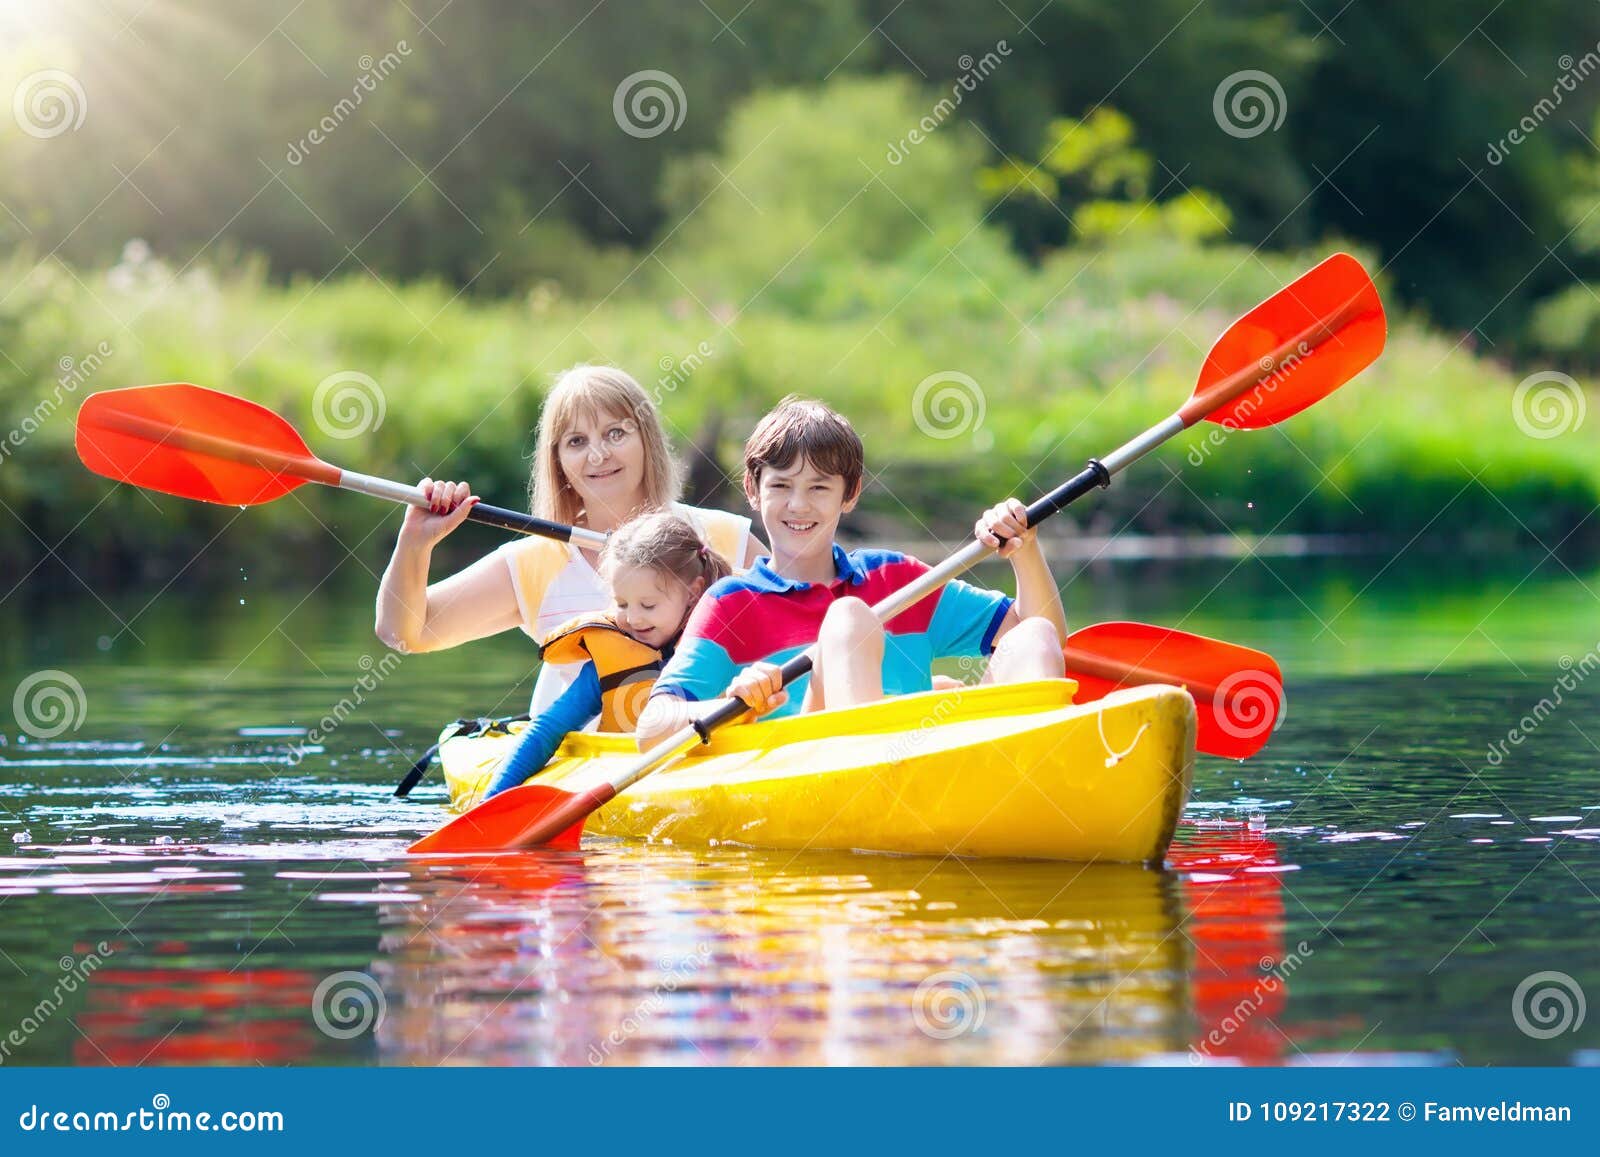 child on kayak. kids on canoe. summer camping.